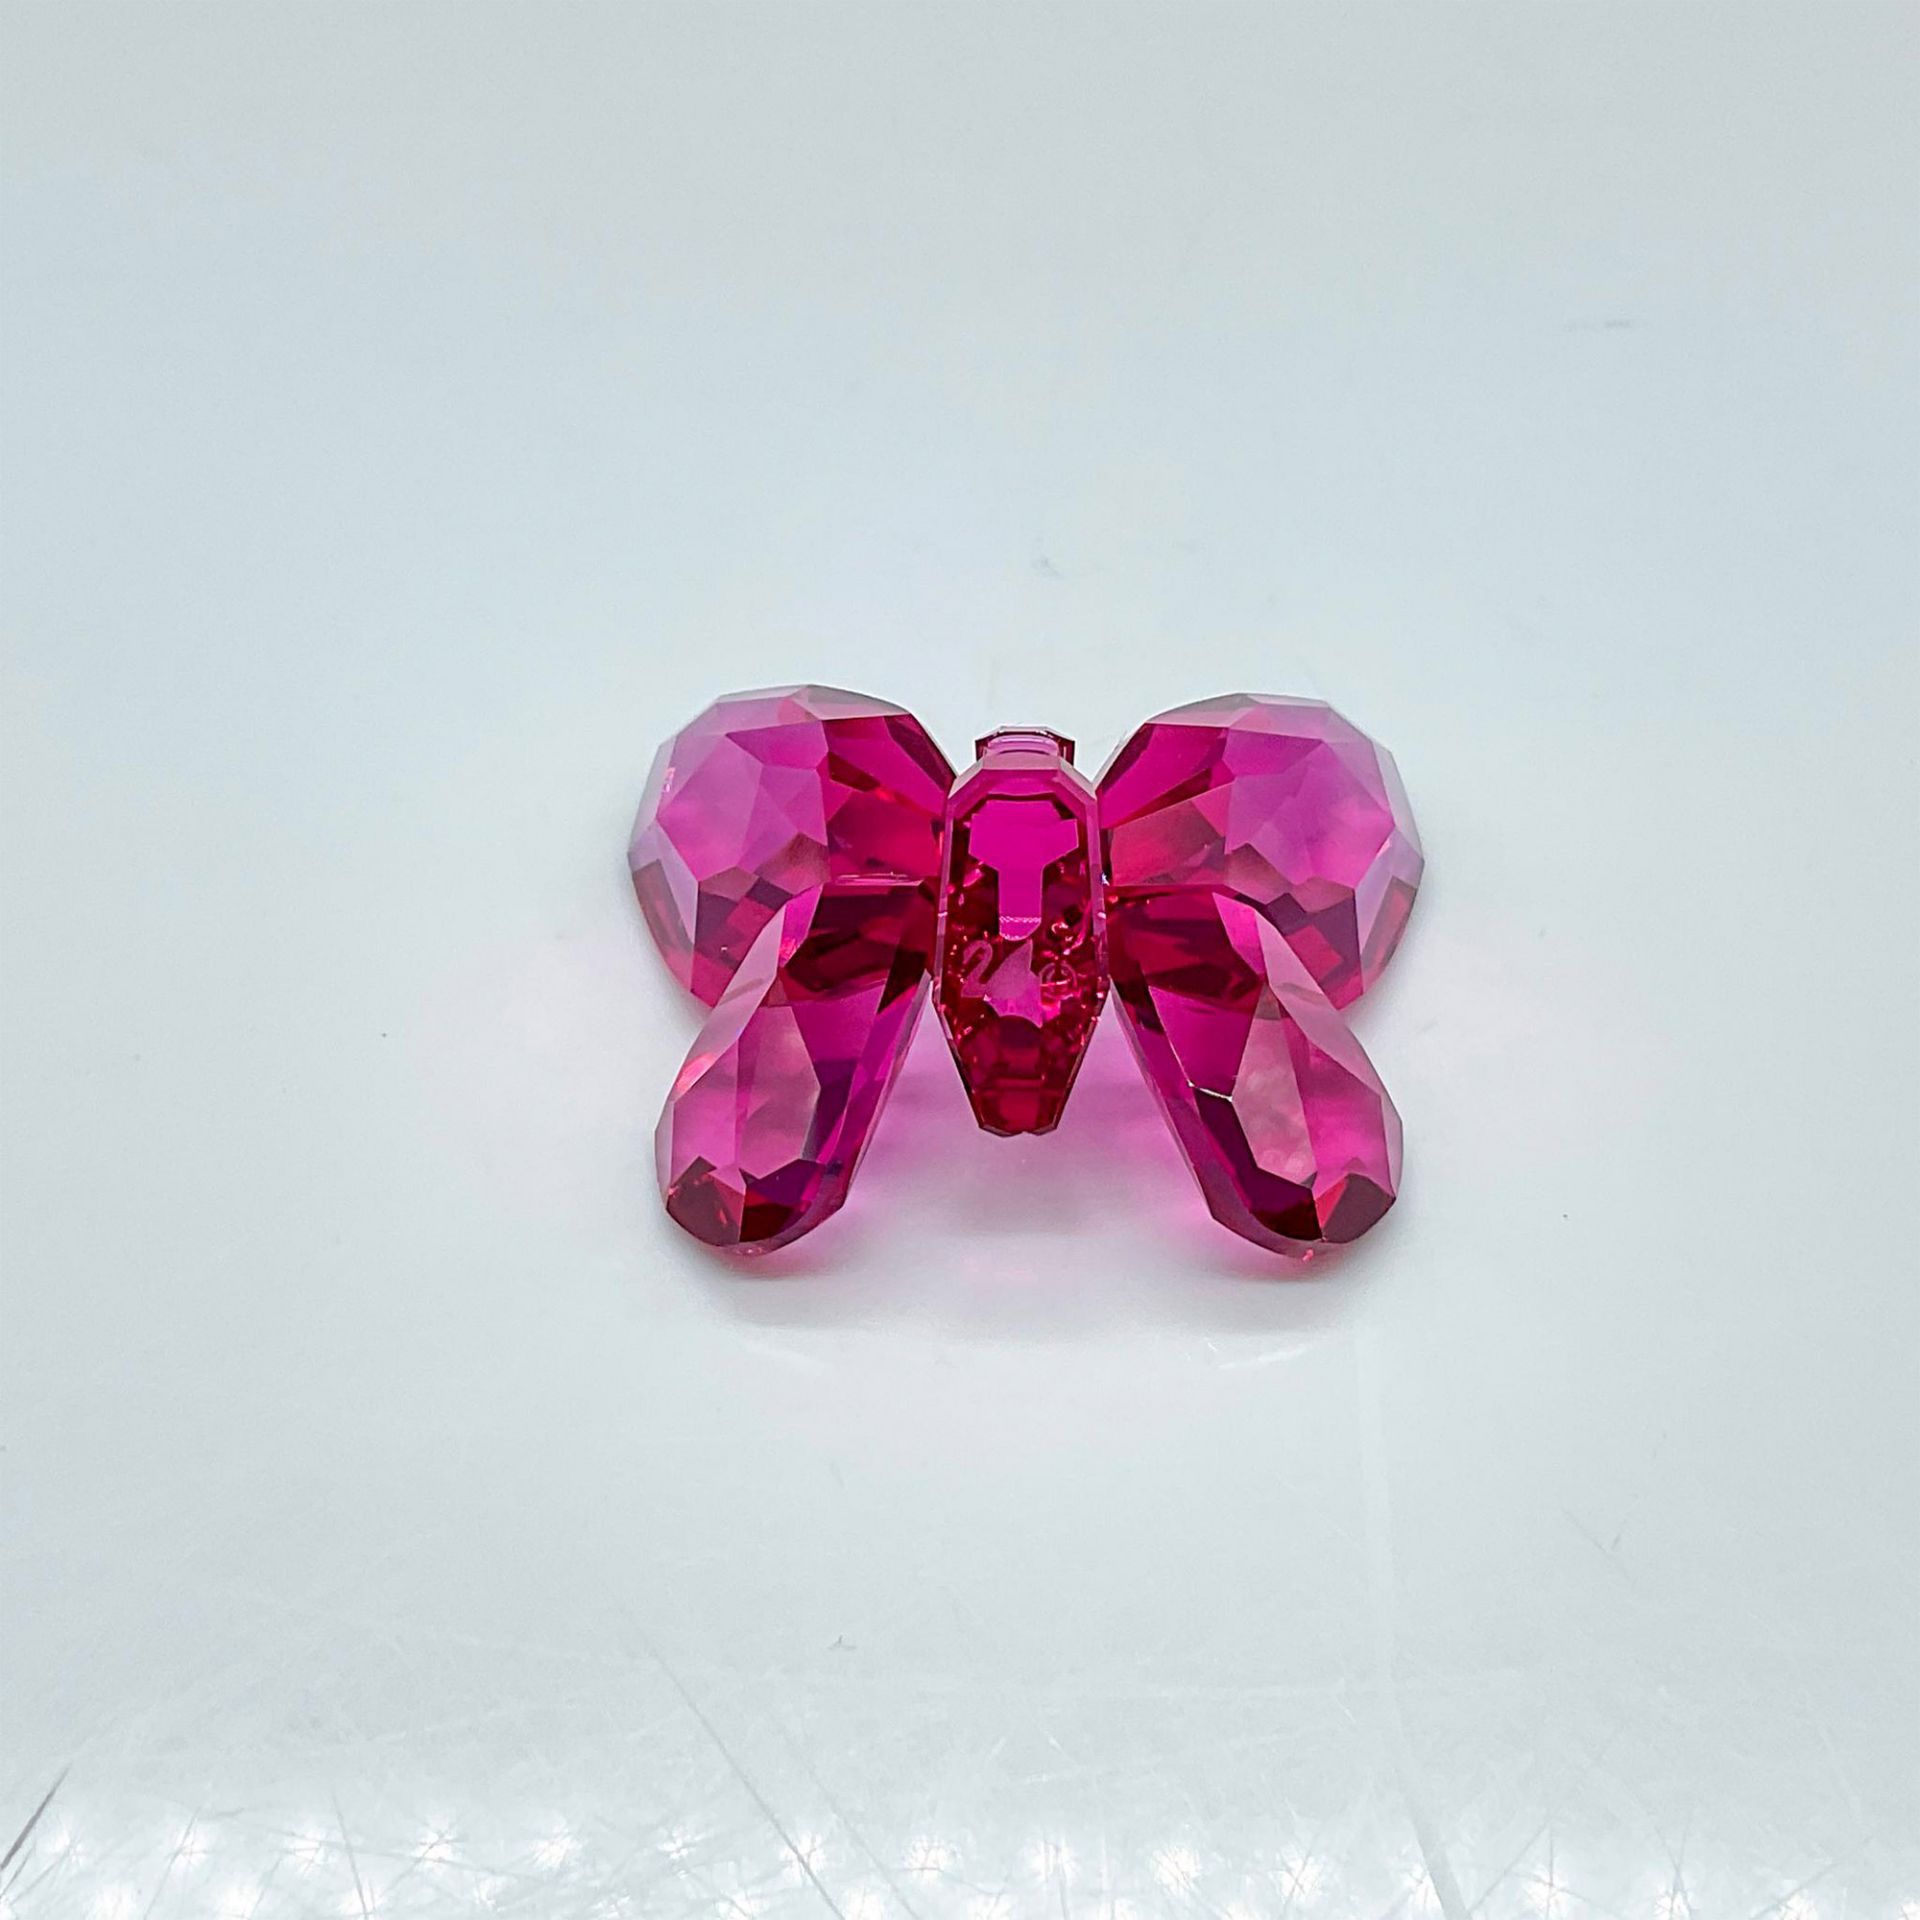 Swarovski Crystal Magenta Butterfly Figurine - Image 3 of 3